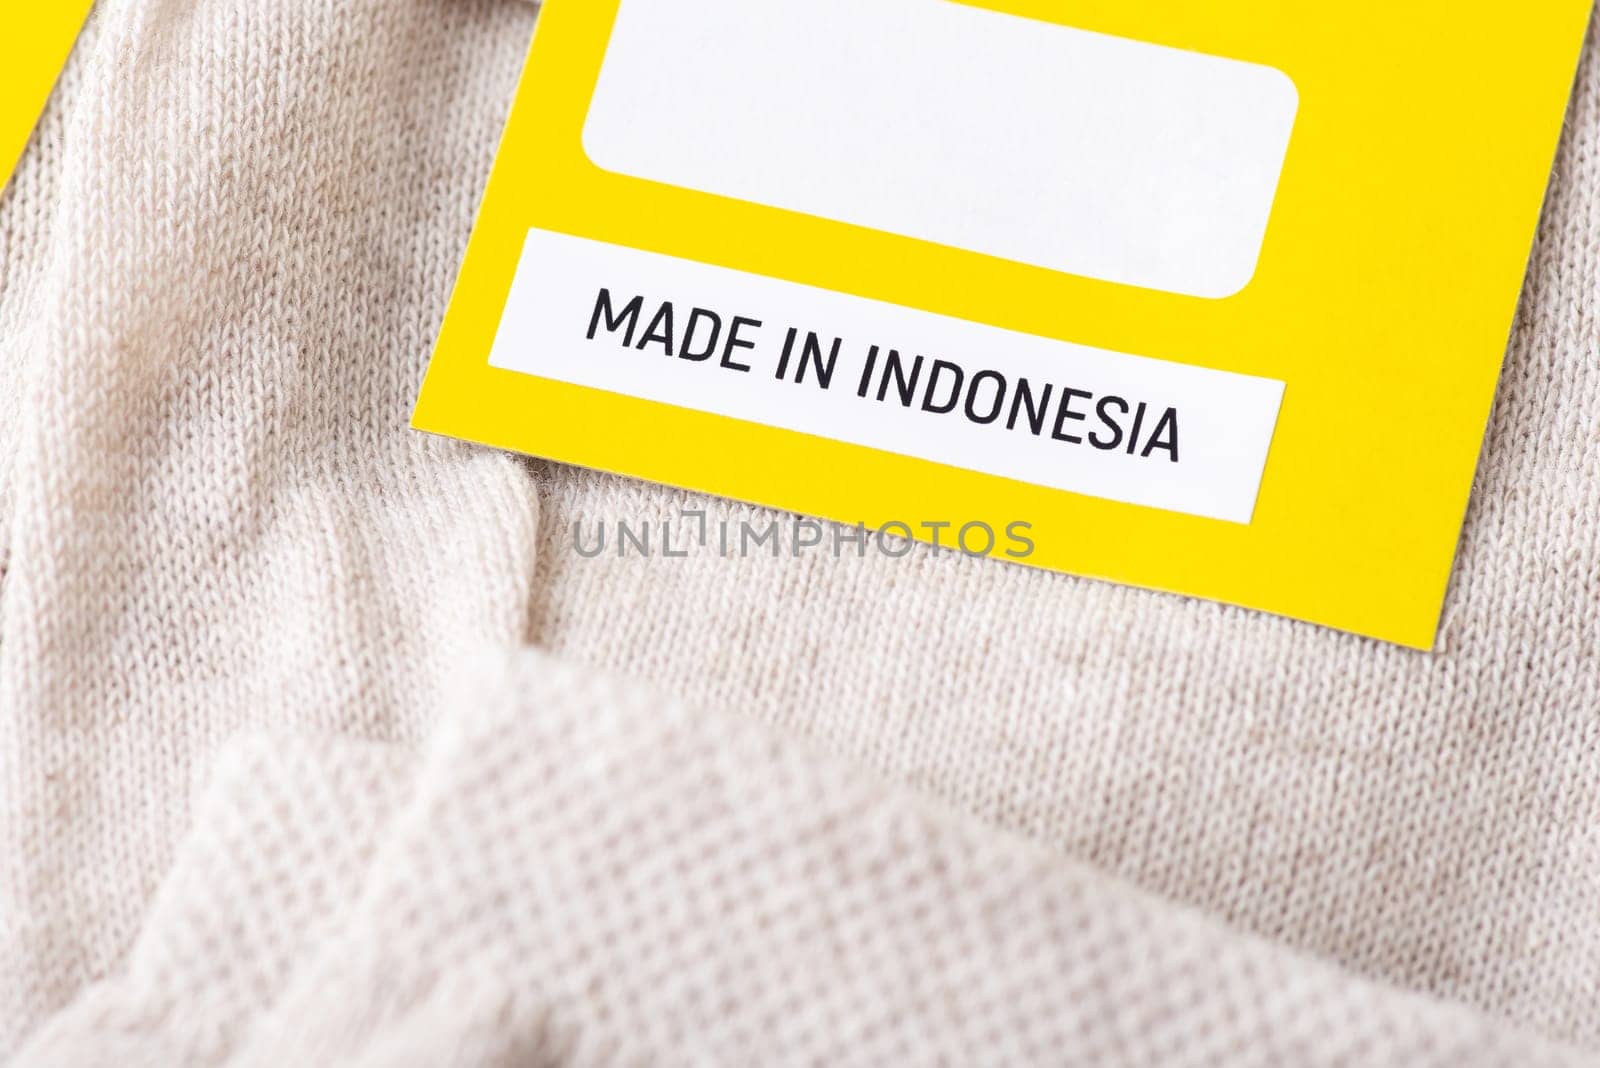 Made in Indonesia inscription on label of socks by VitaliiPetrushenko